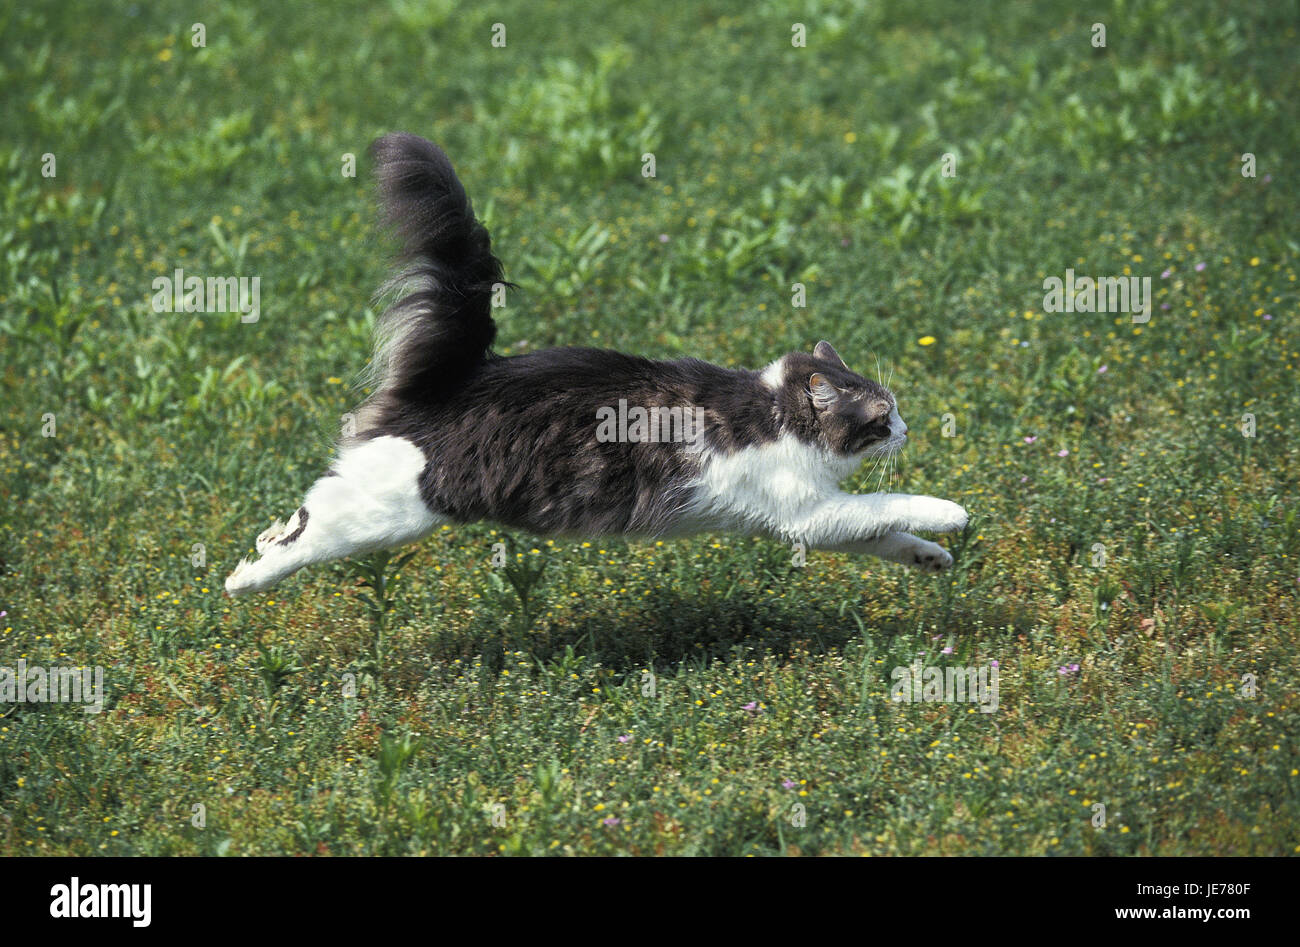 House cat, grass, run, Stock Photo